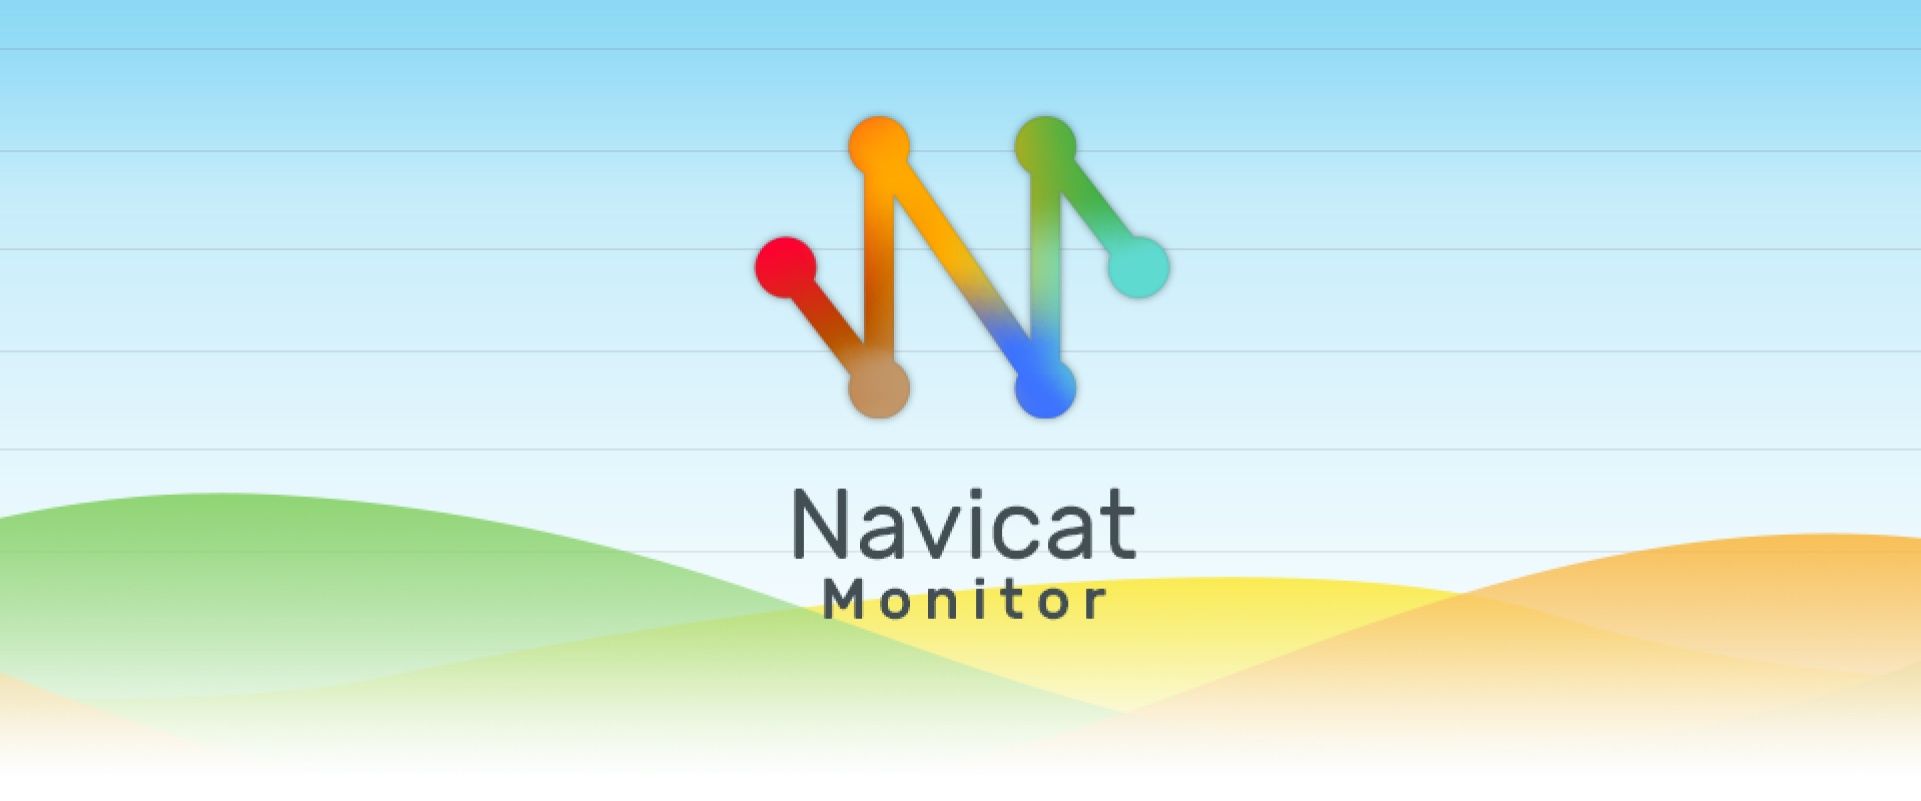 Review of Navicat Monitor 2